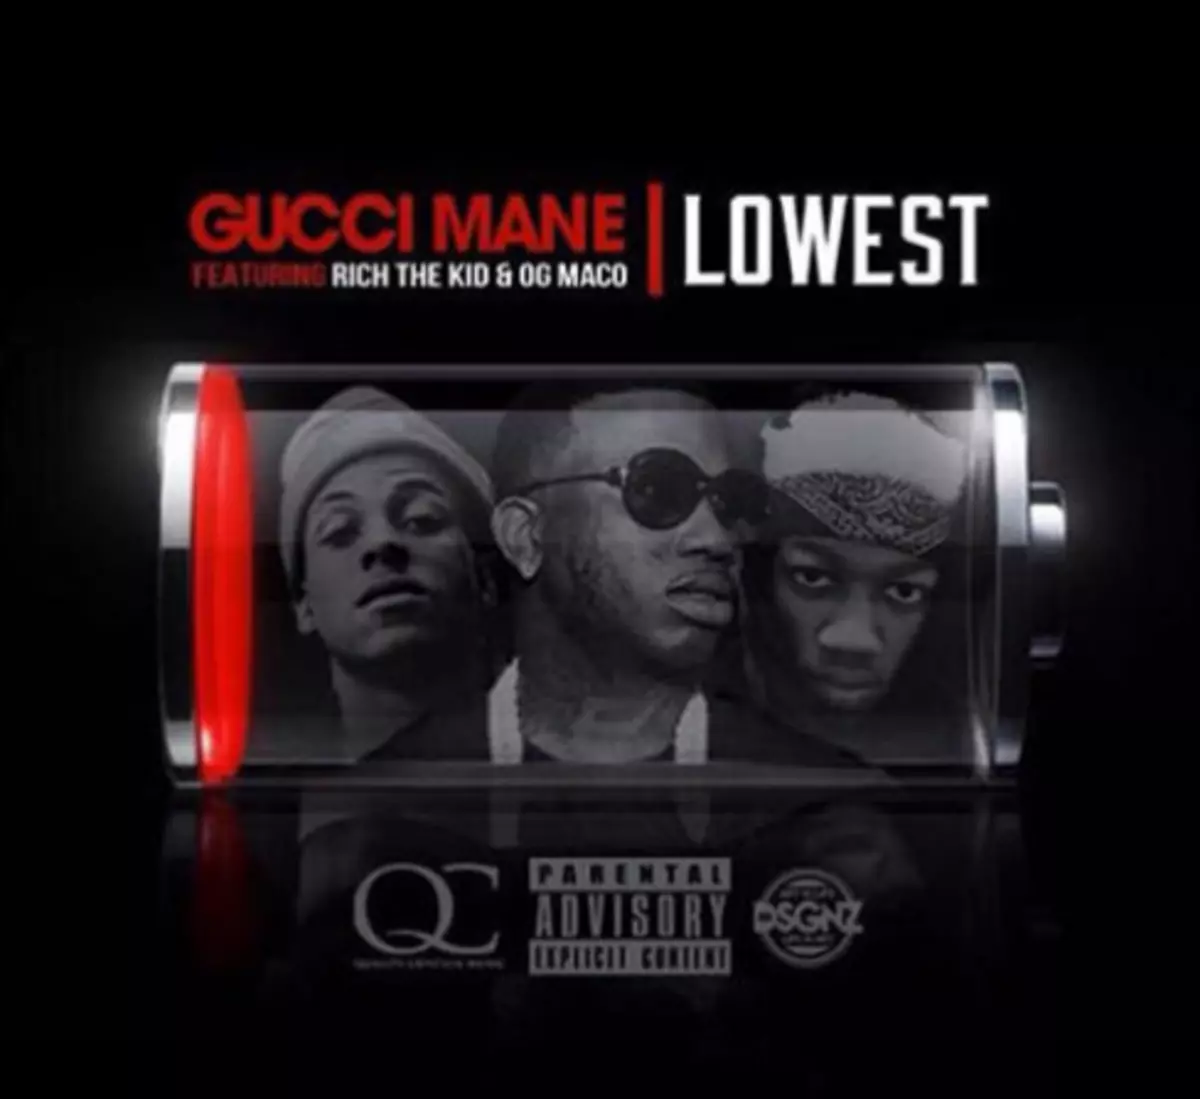 Gucci Mane feat. Лейбл Gucci Mane. Gucci Mane обложки. Gucci Mane для трека. Feature rich